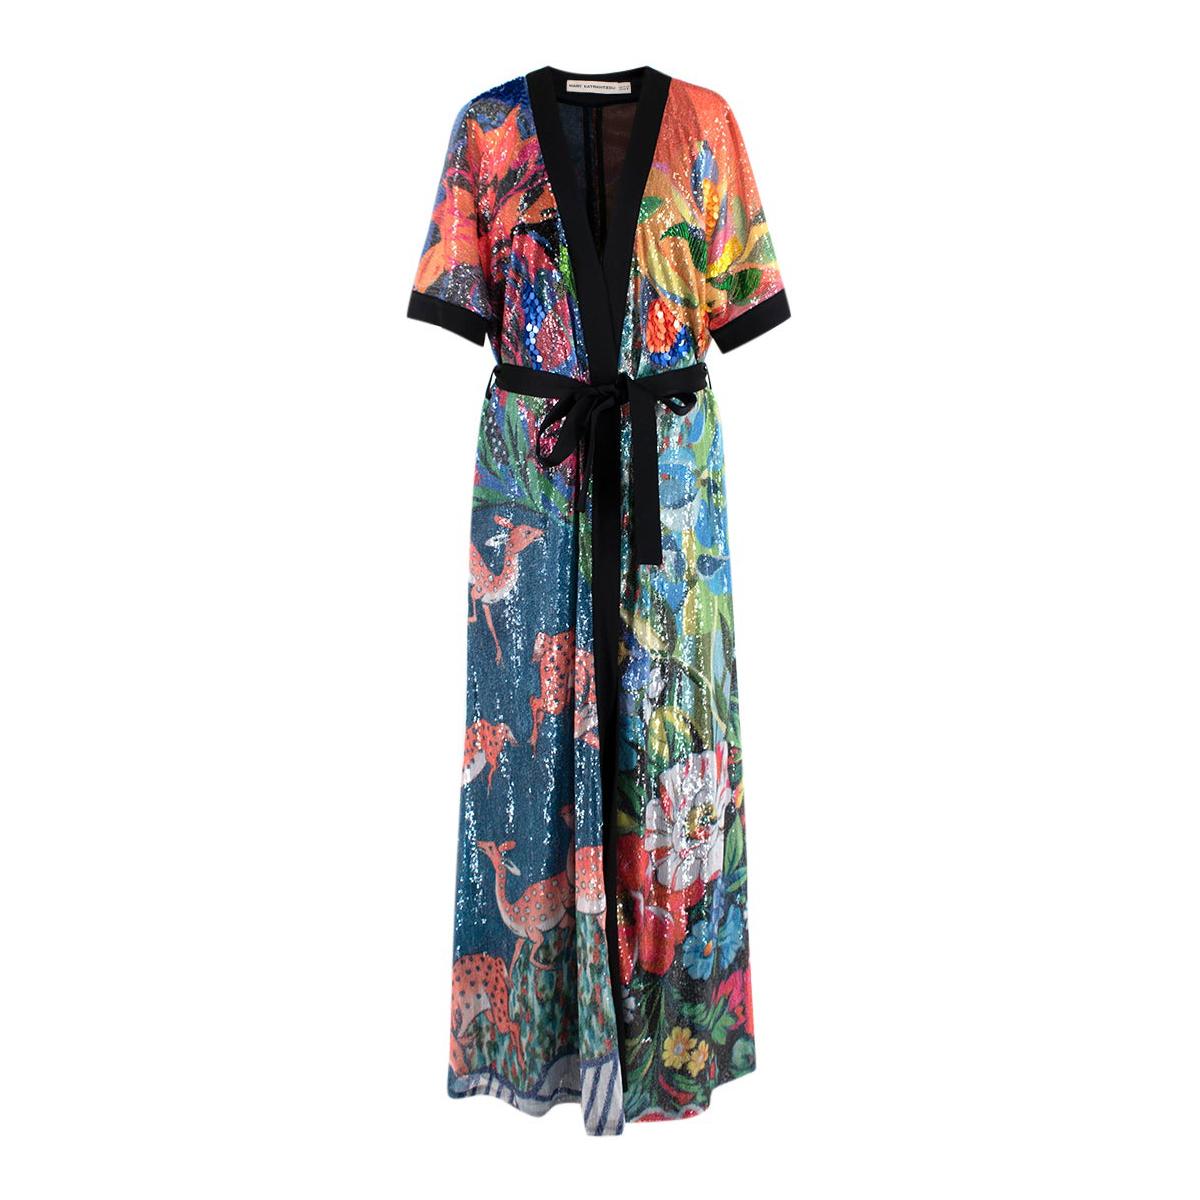 Mary Katrantzou Natalia Floral Sequin Embellished Crepe Dress - Us size 6 For Sale